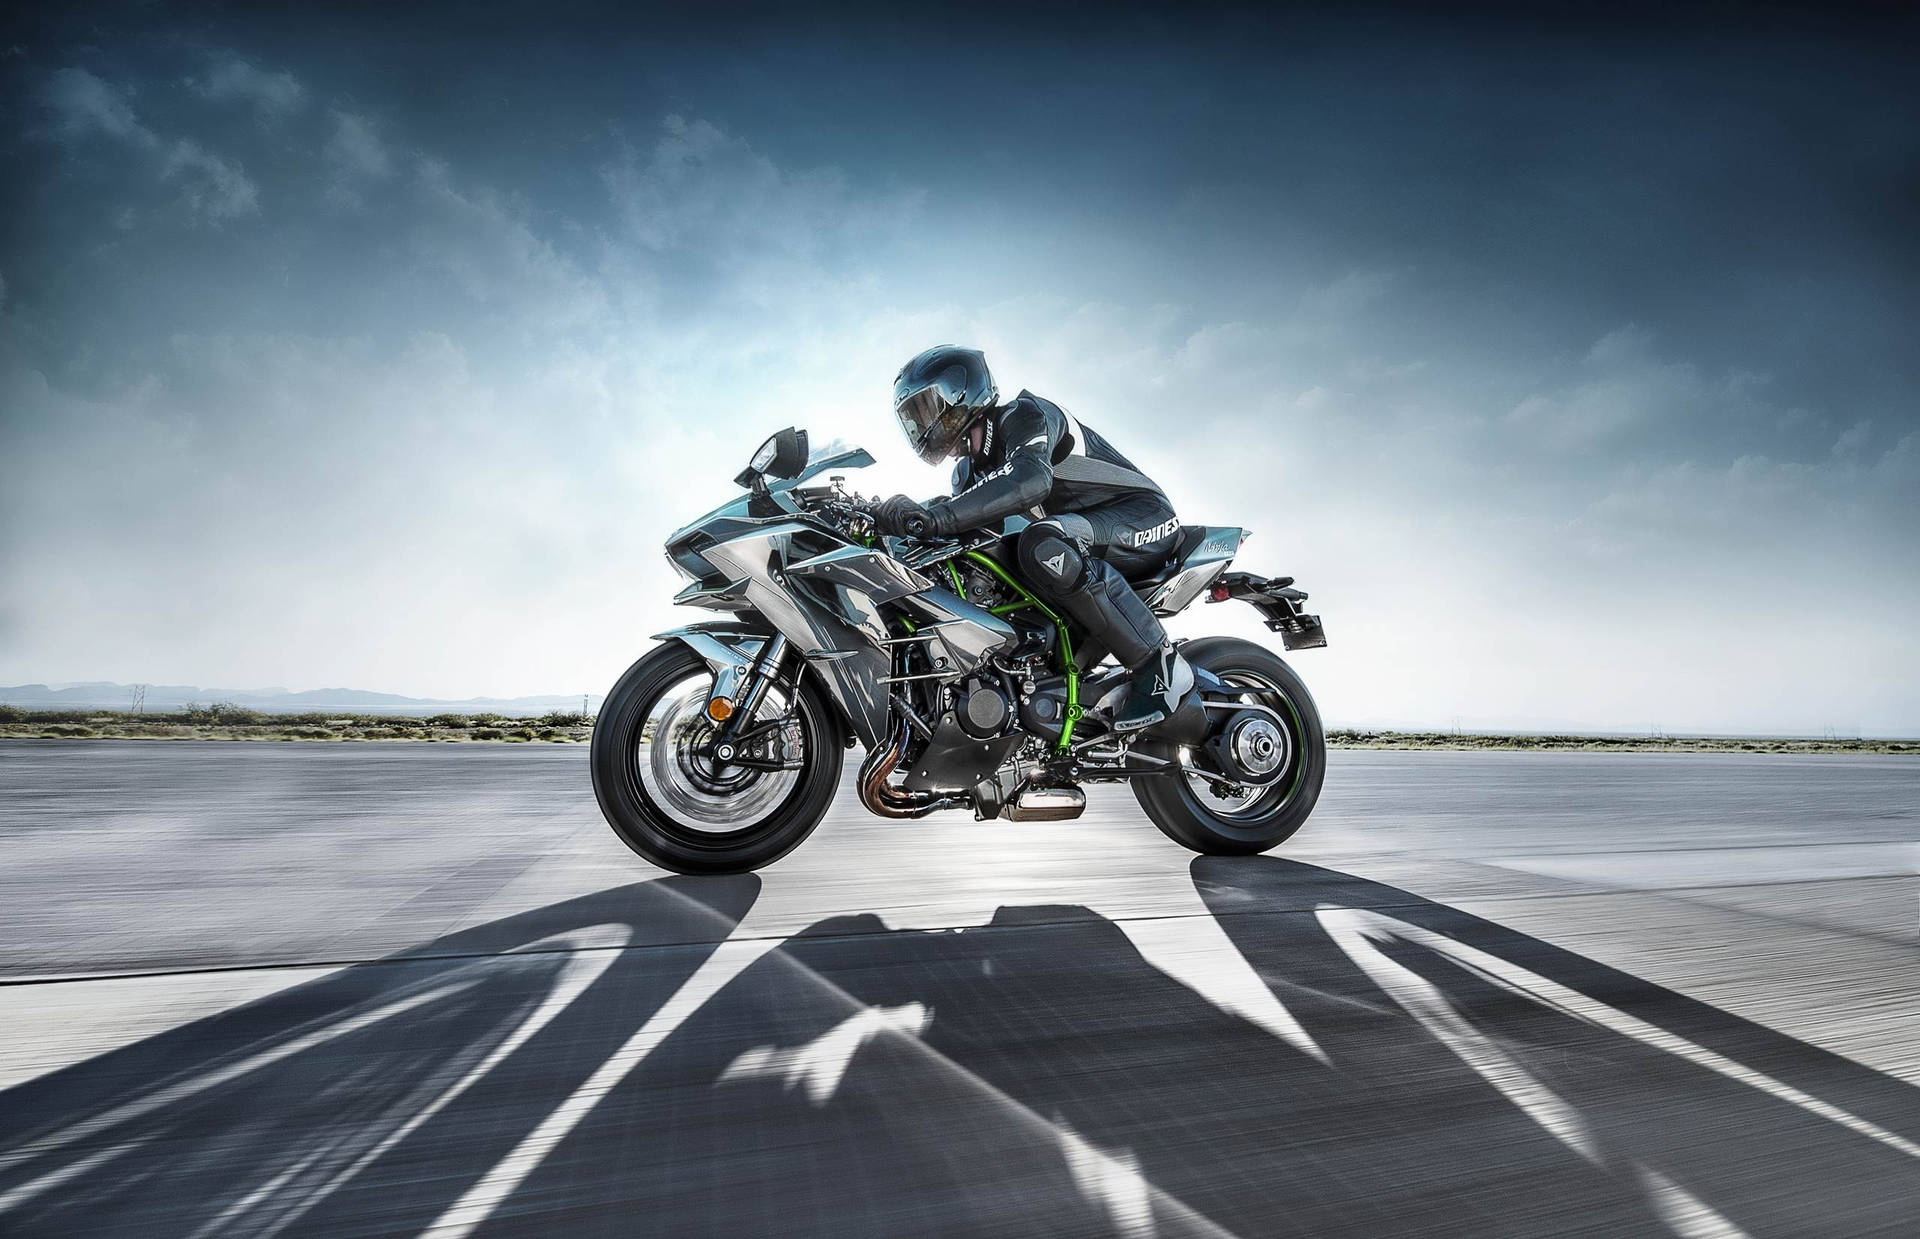 A High-powered Kawasaki H2r In Its Full Glory Wallpaper